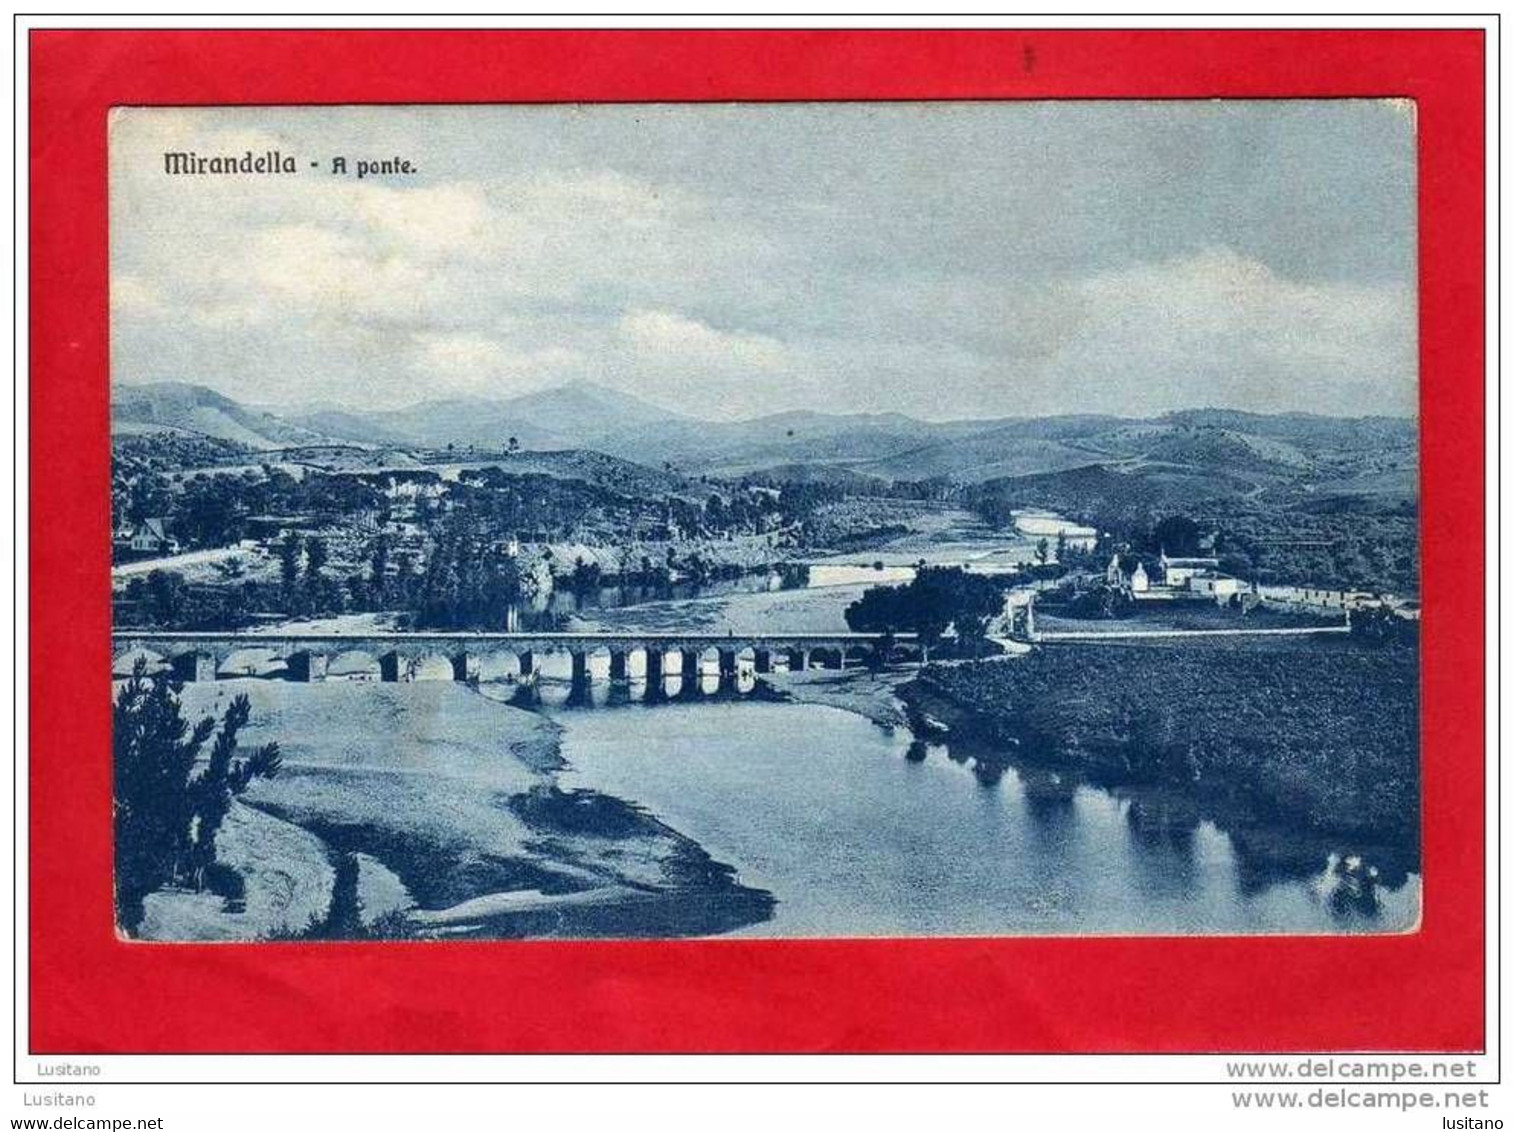 Mirandela Mirandella A Ponte Portugal - Bragança